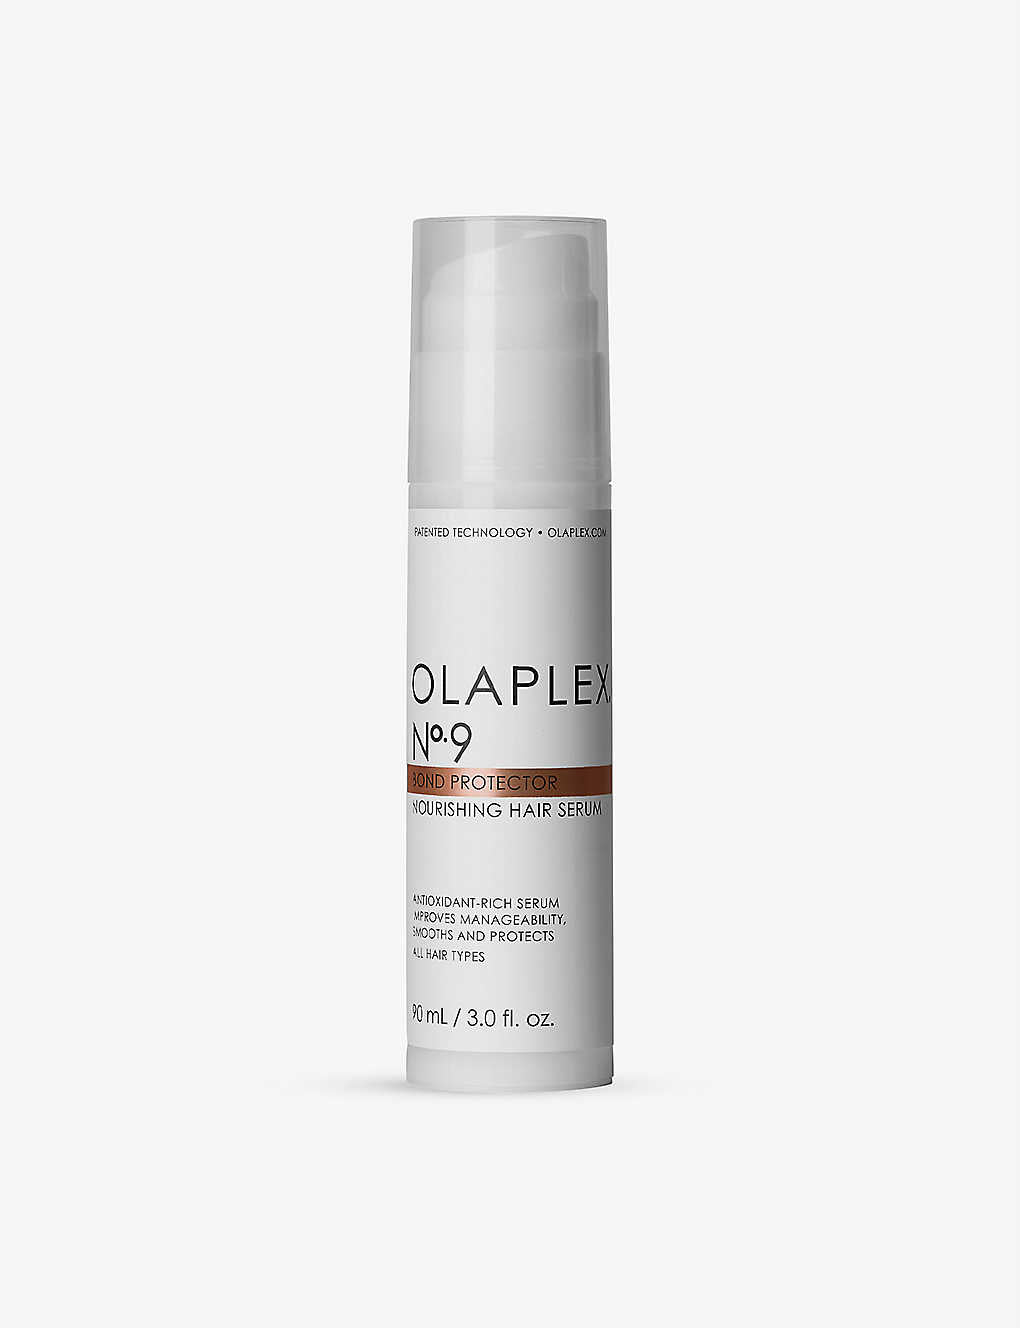 Olaplex N°9 Bond Protector Nourishing hair serum